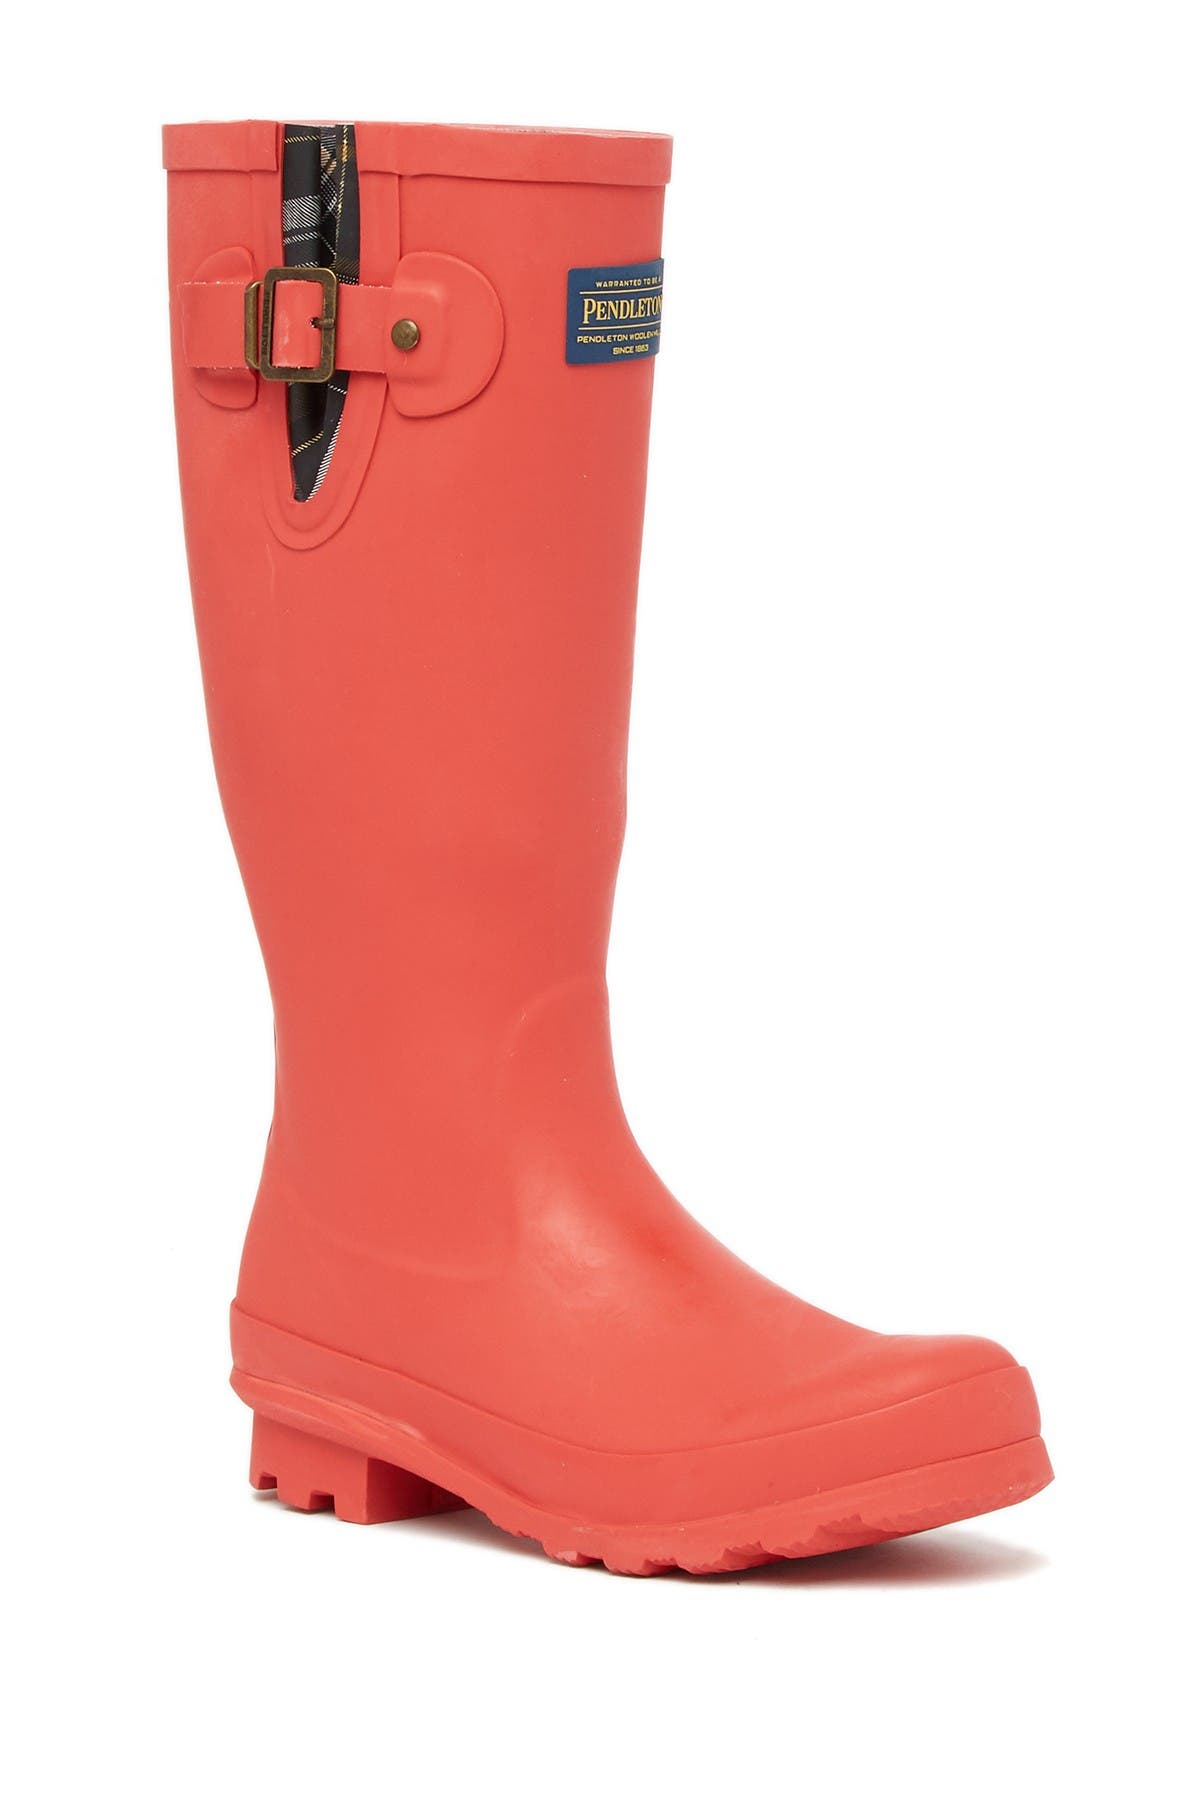 pendleton rain boots